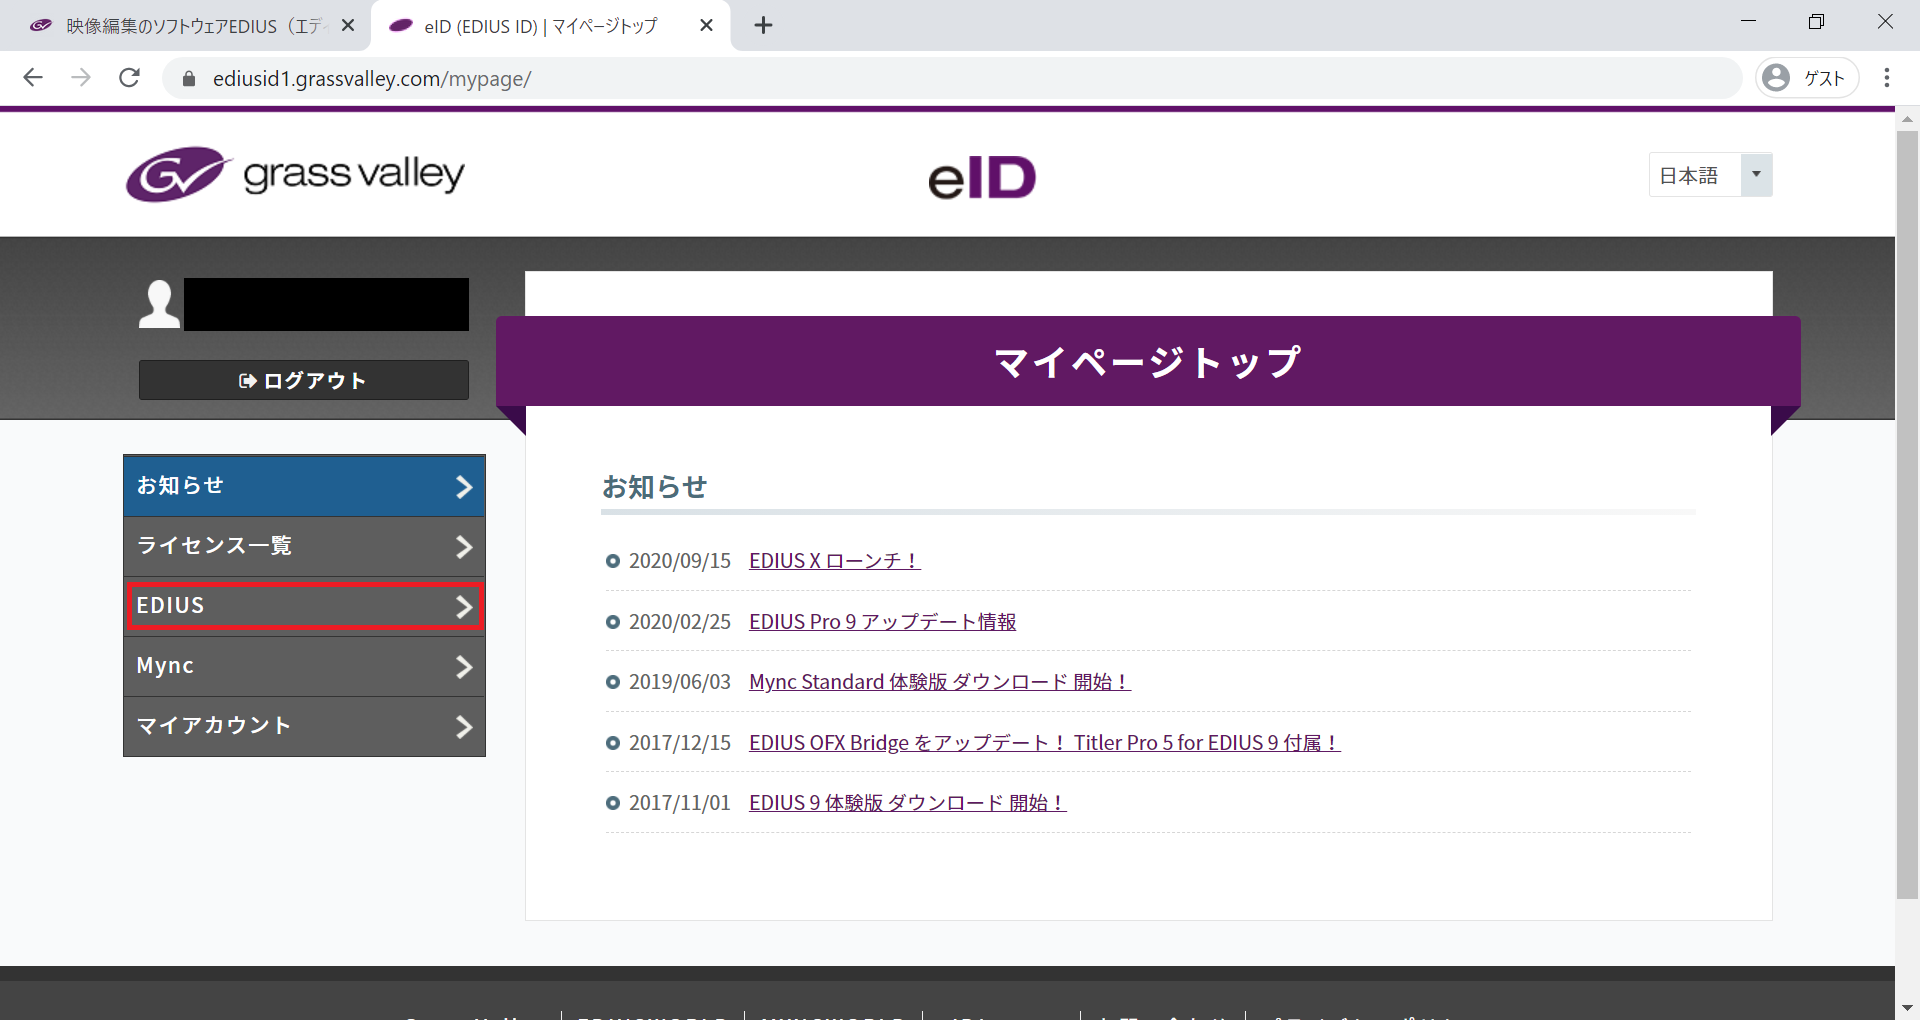 EDIUSのマイページにログインしてダウンロードしたい製品を選ぶ